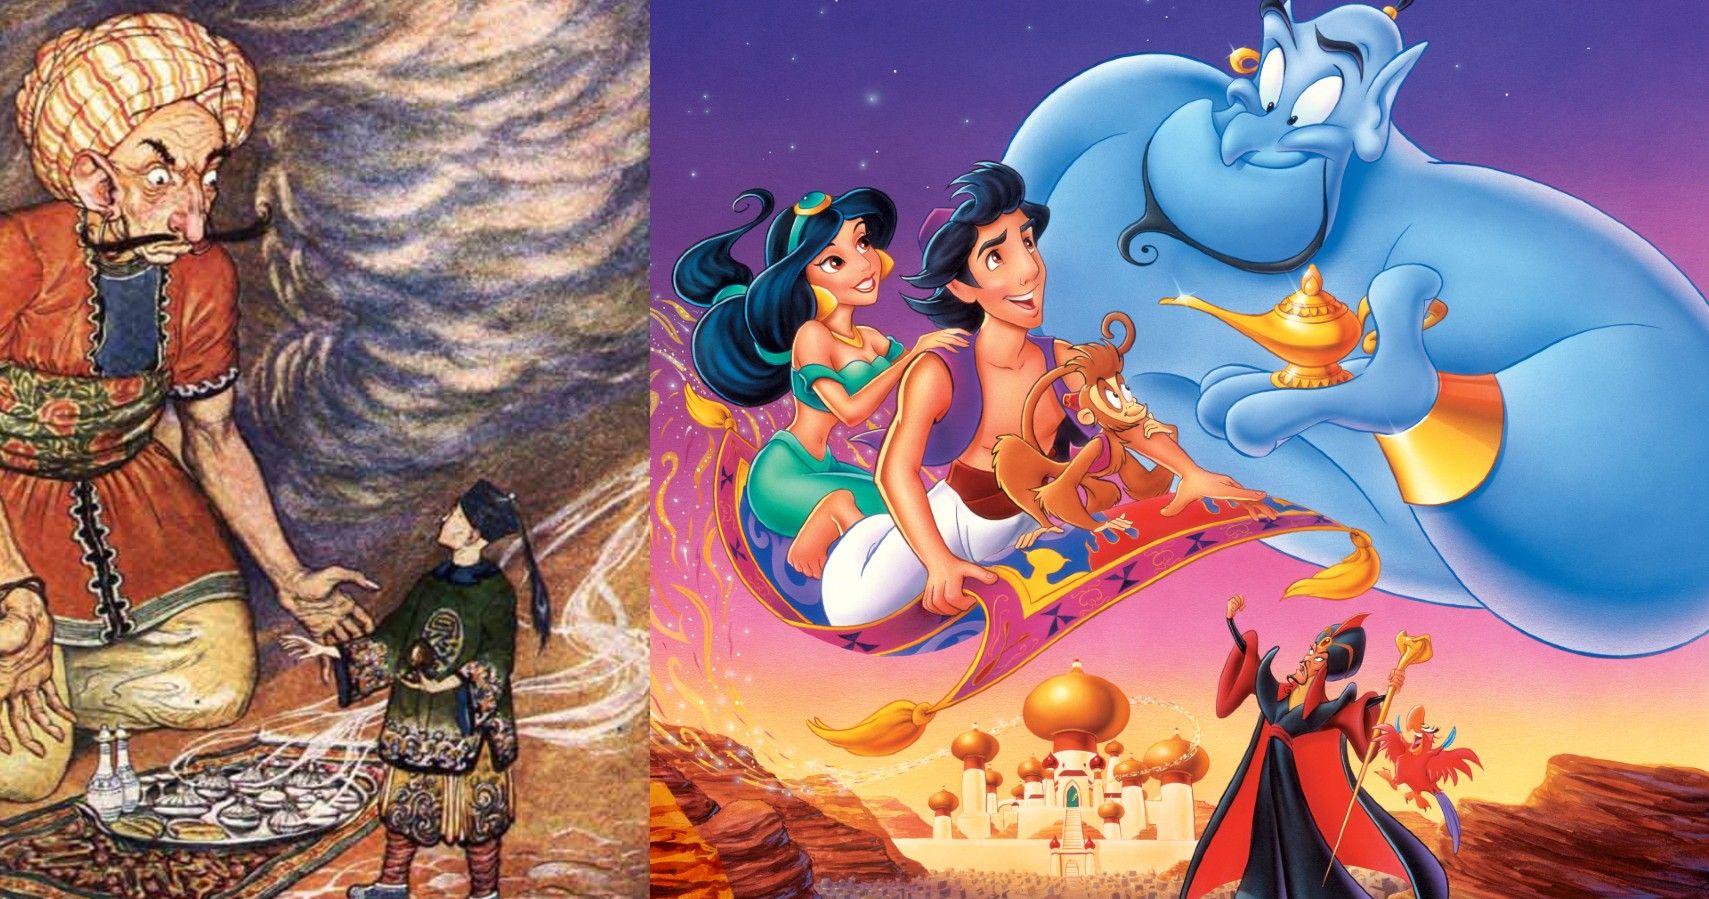 Aladdin. Disney